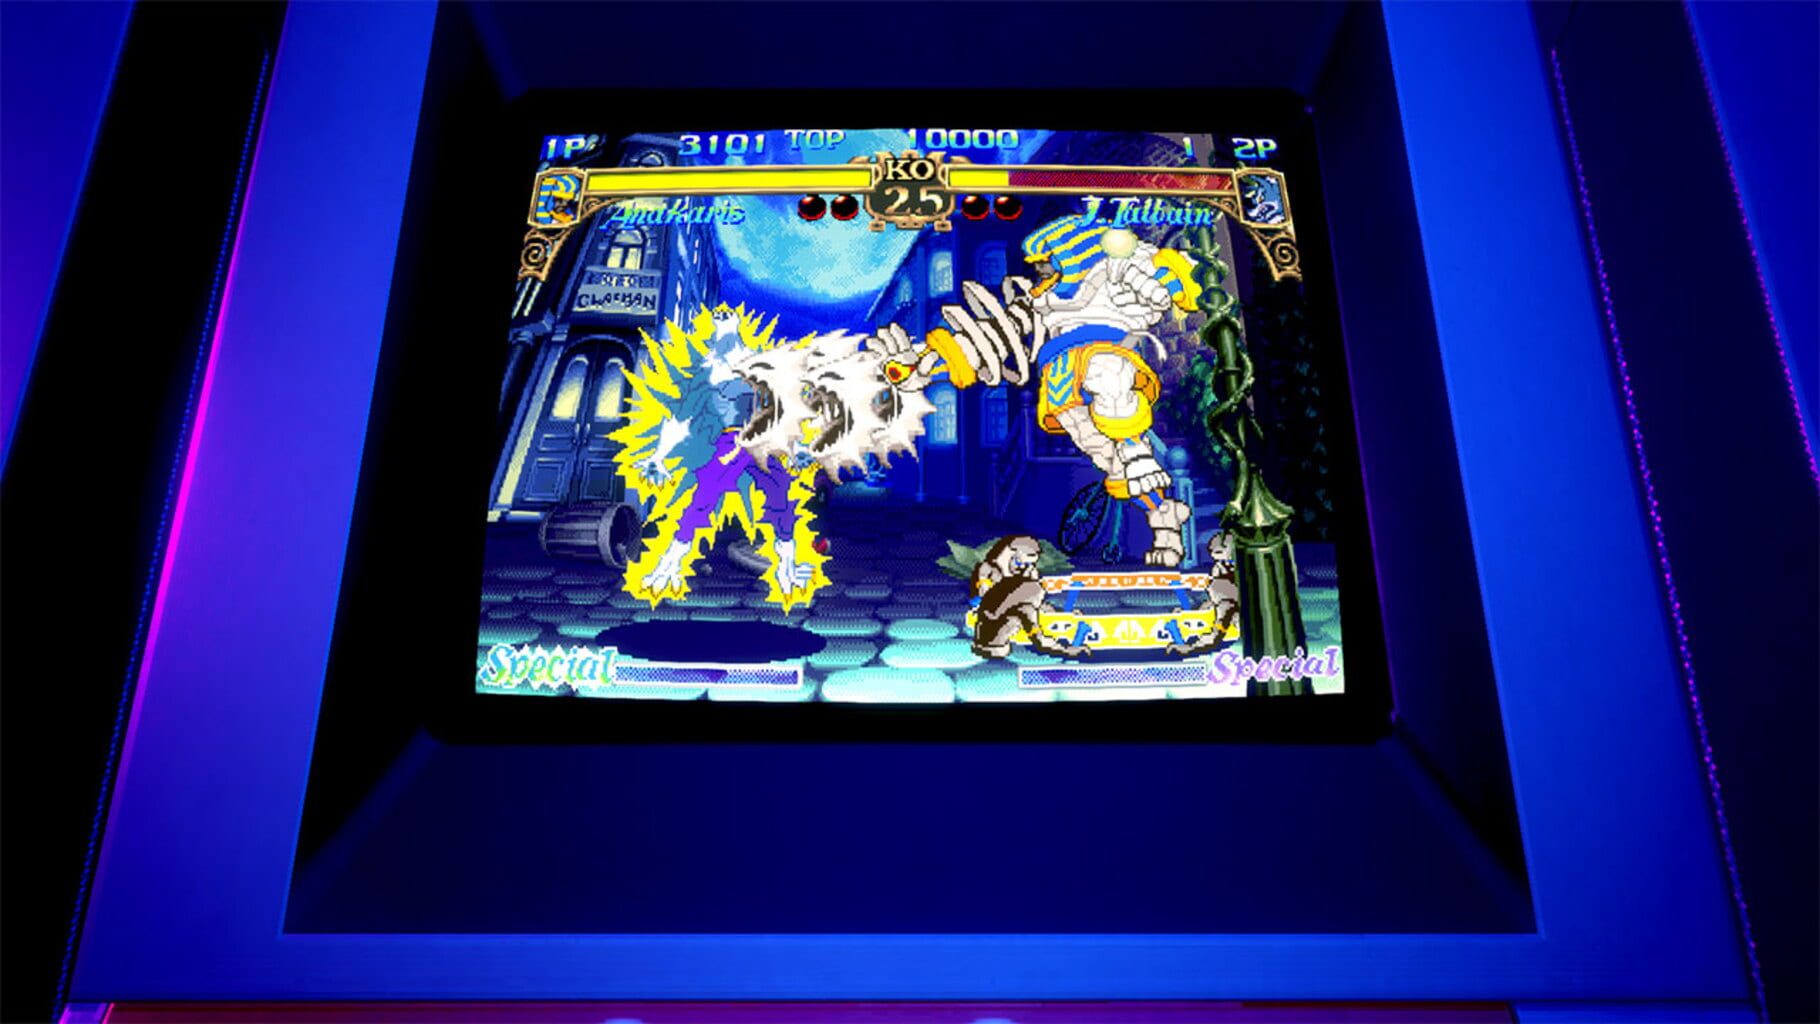 Capcom Arcade 2nd Stadium: Darkstalkers - The Night Warriors screenshot